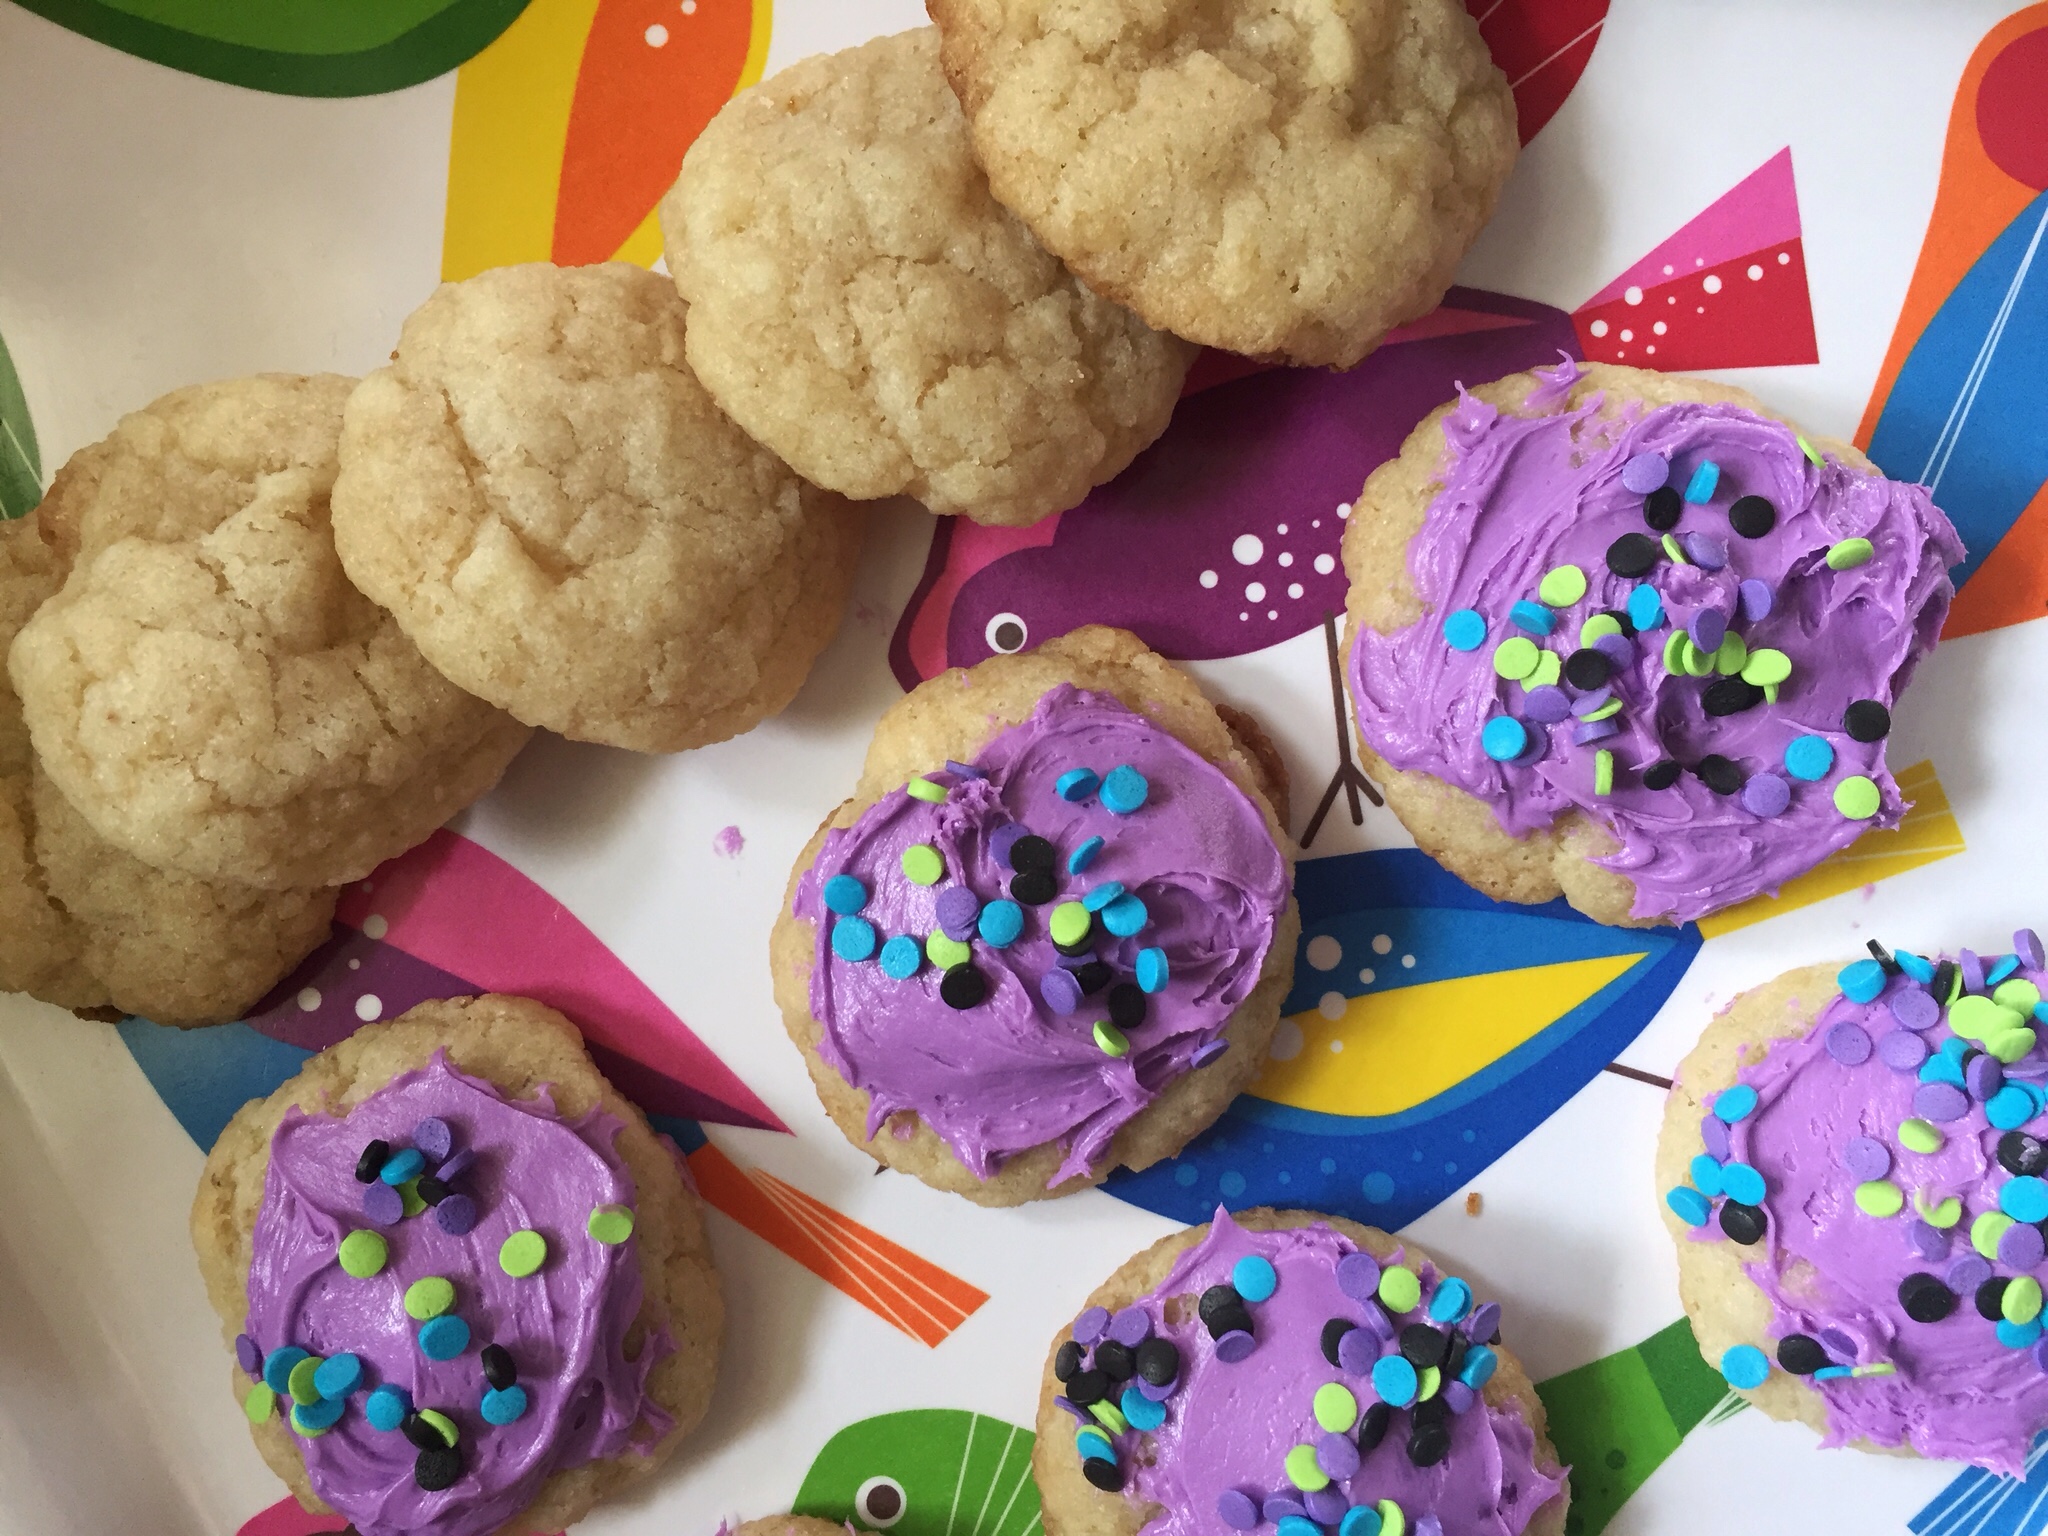 Sugar Cookie Sweetness with Pillsbury Premium Gluten-Free Baking Mixes